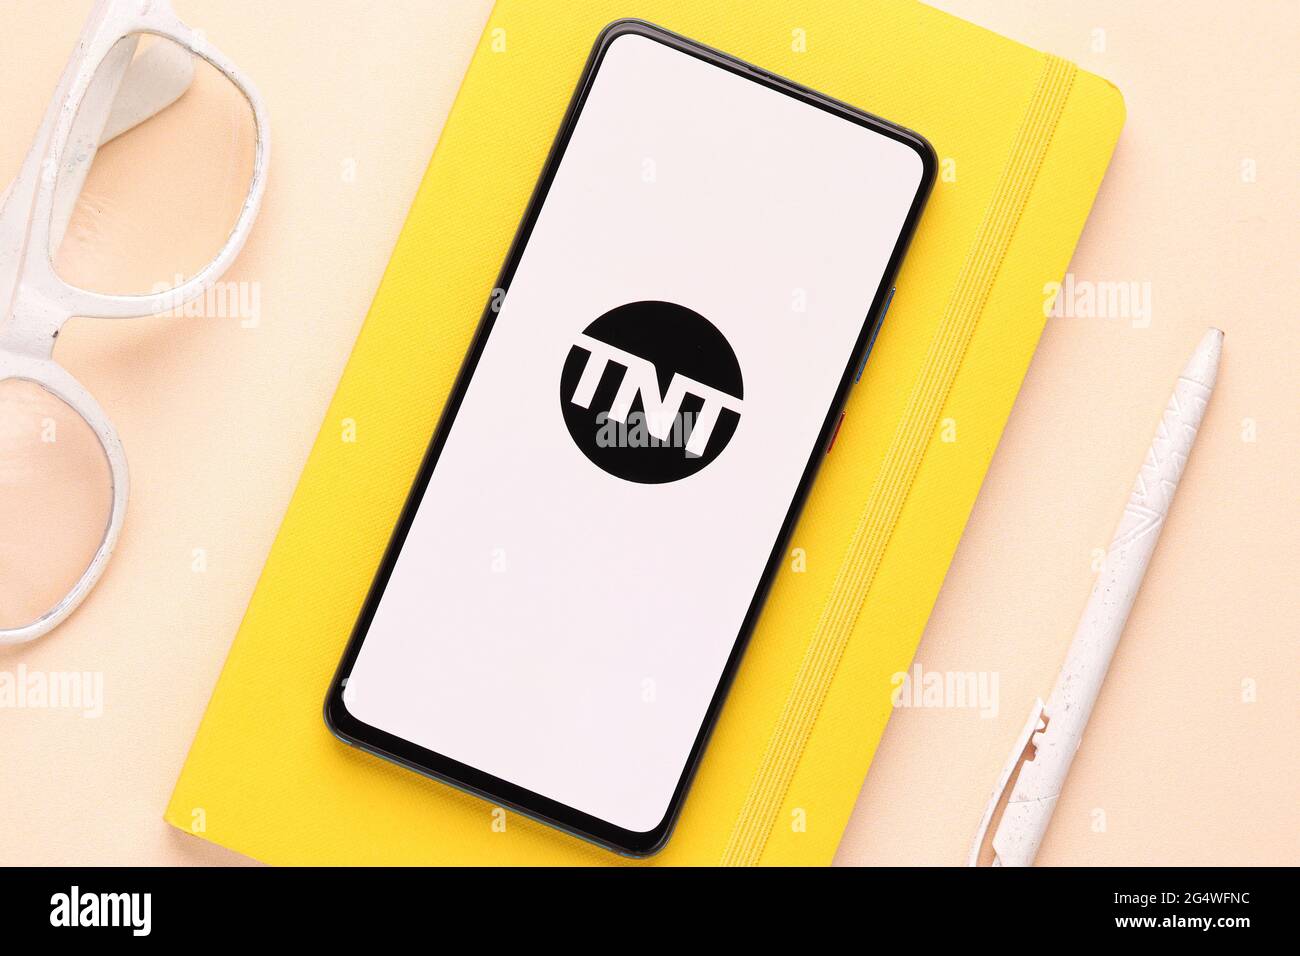 TNT tv logo on phone screen stock image. Stock Photo